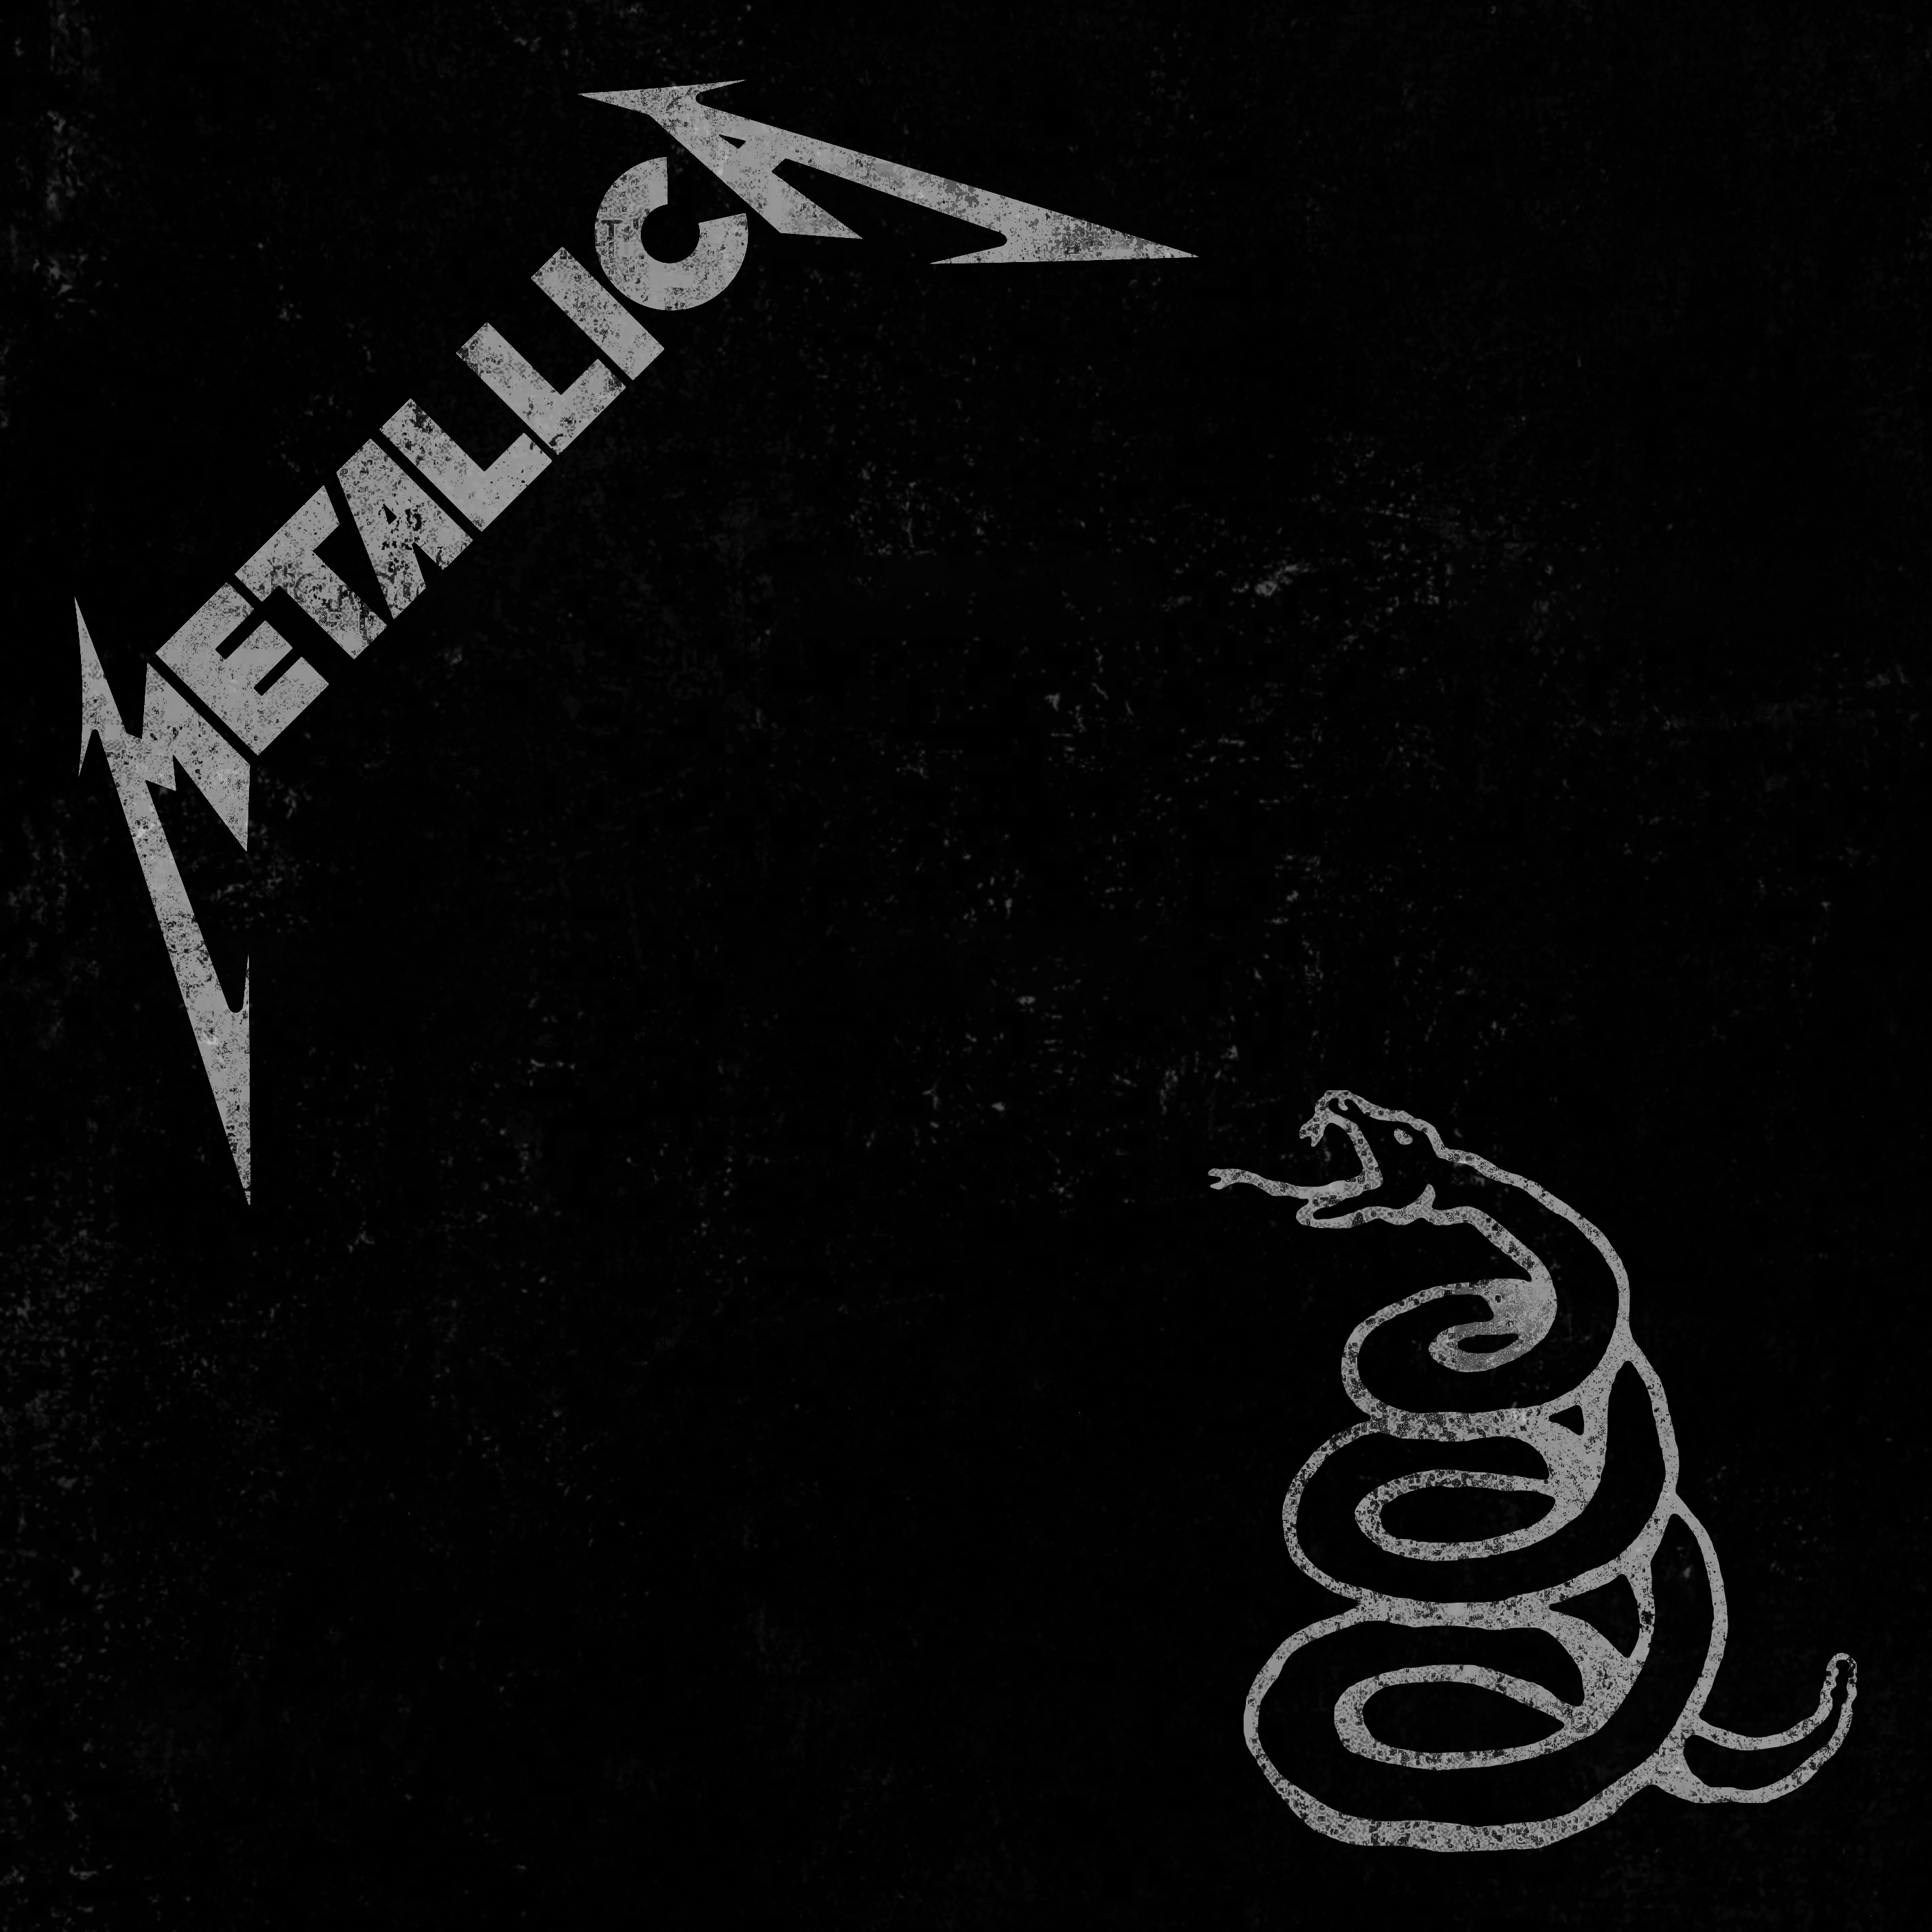 Metallica Black Album Cover by KZcheese on DeviantArt